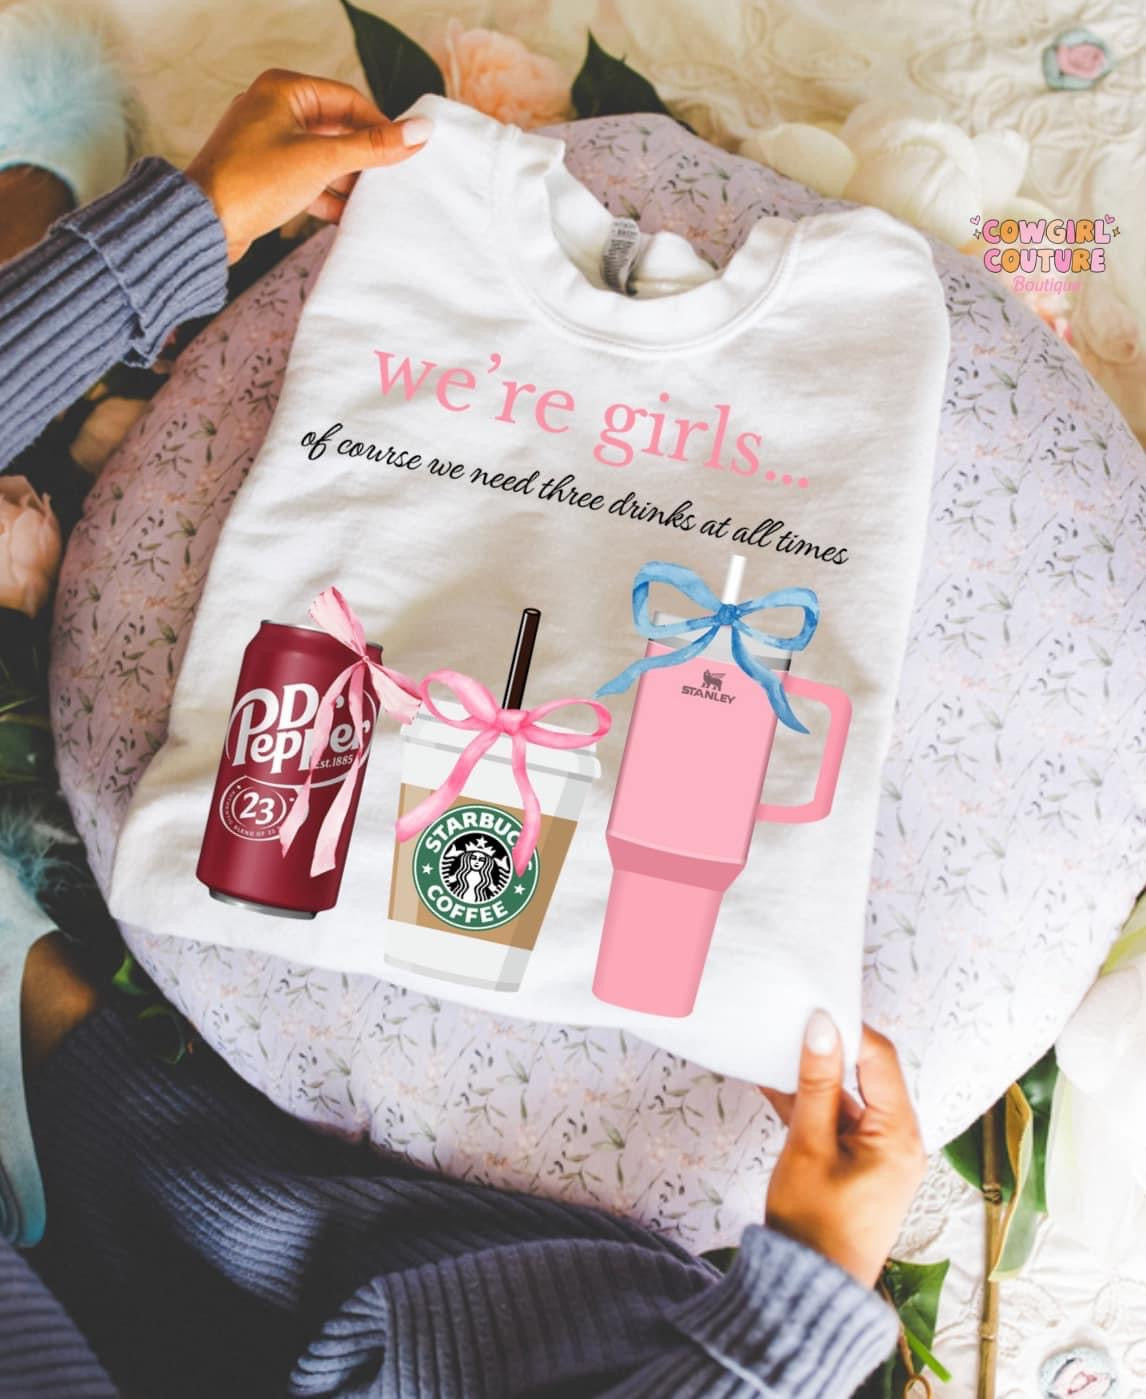 We’re girls - of course we need three drinks. (Starbucks)